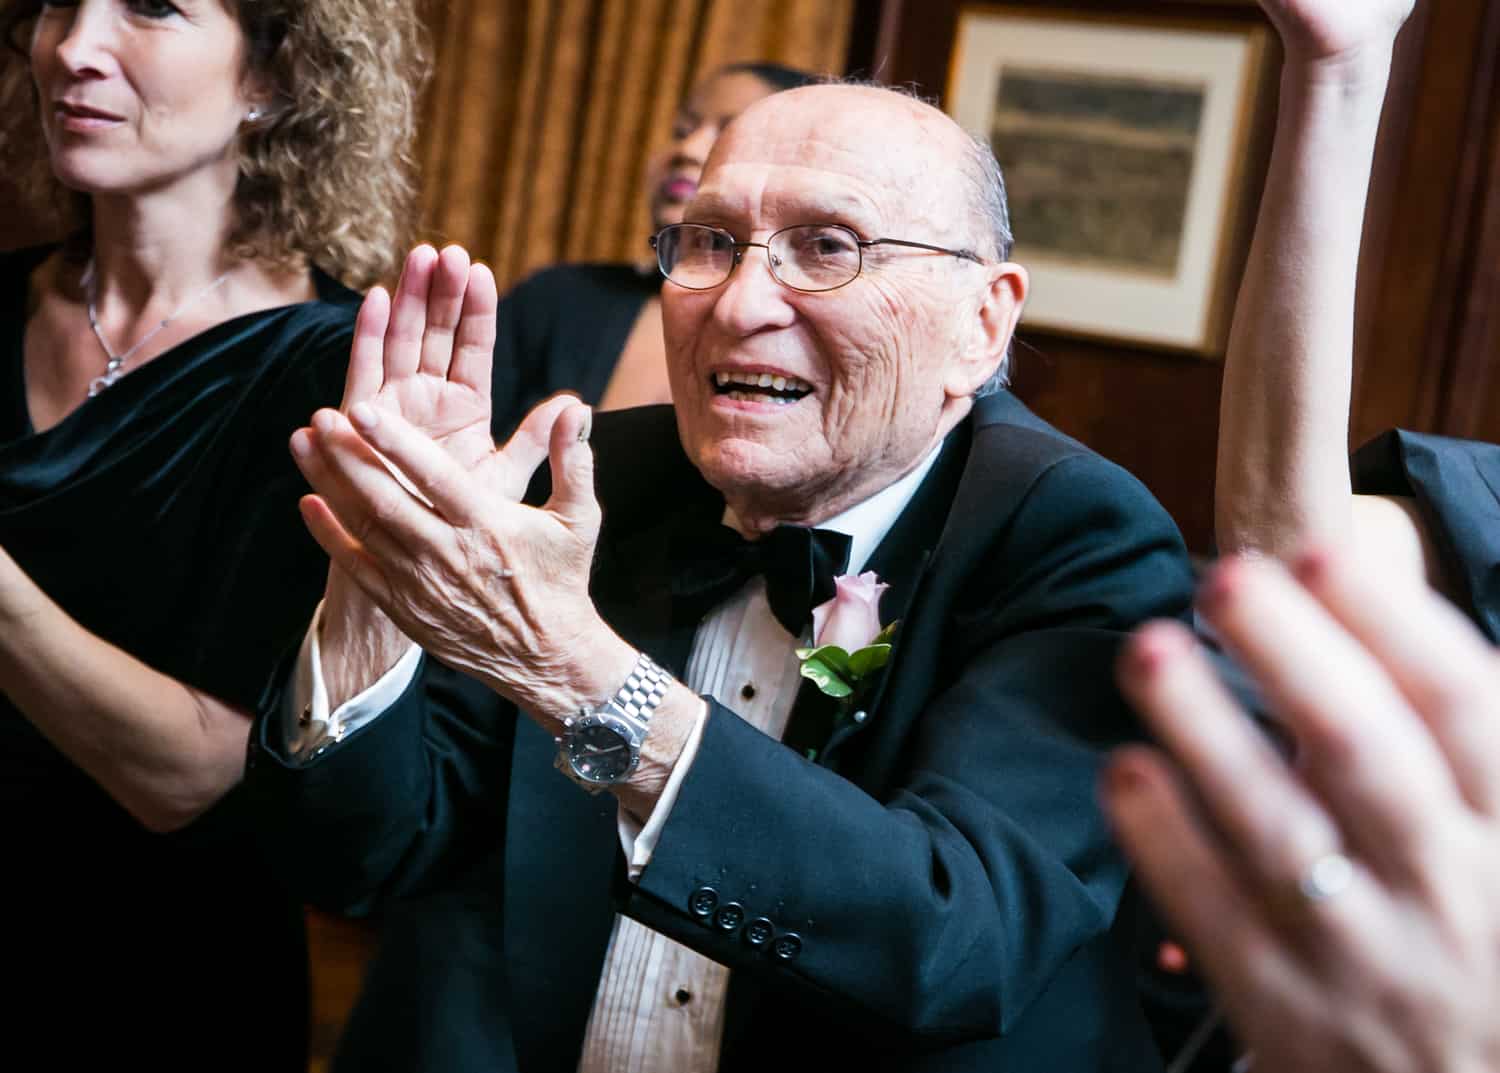 Older man clapping at Harvard Club wedding reception